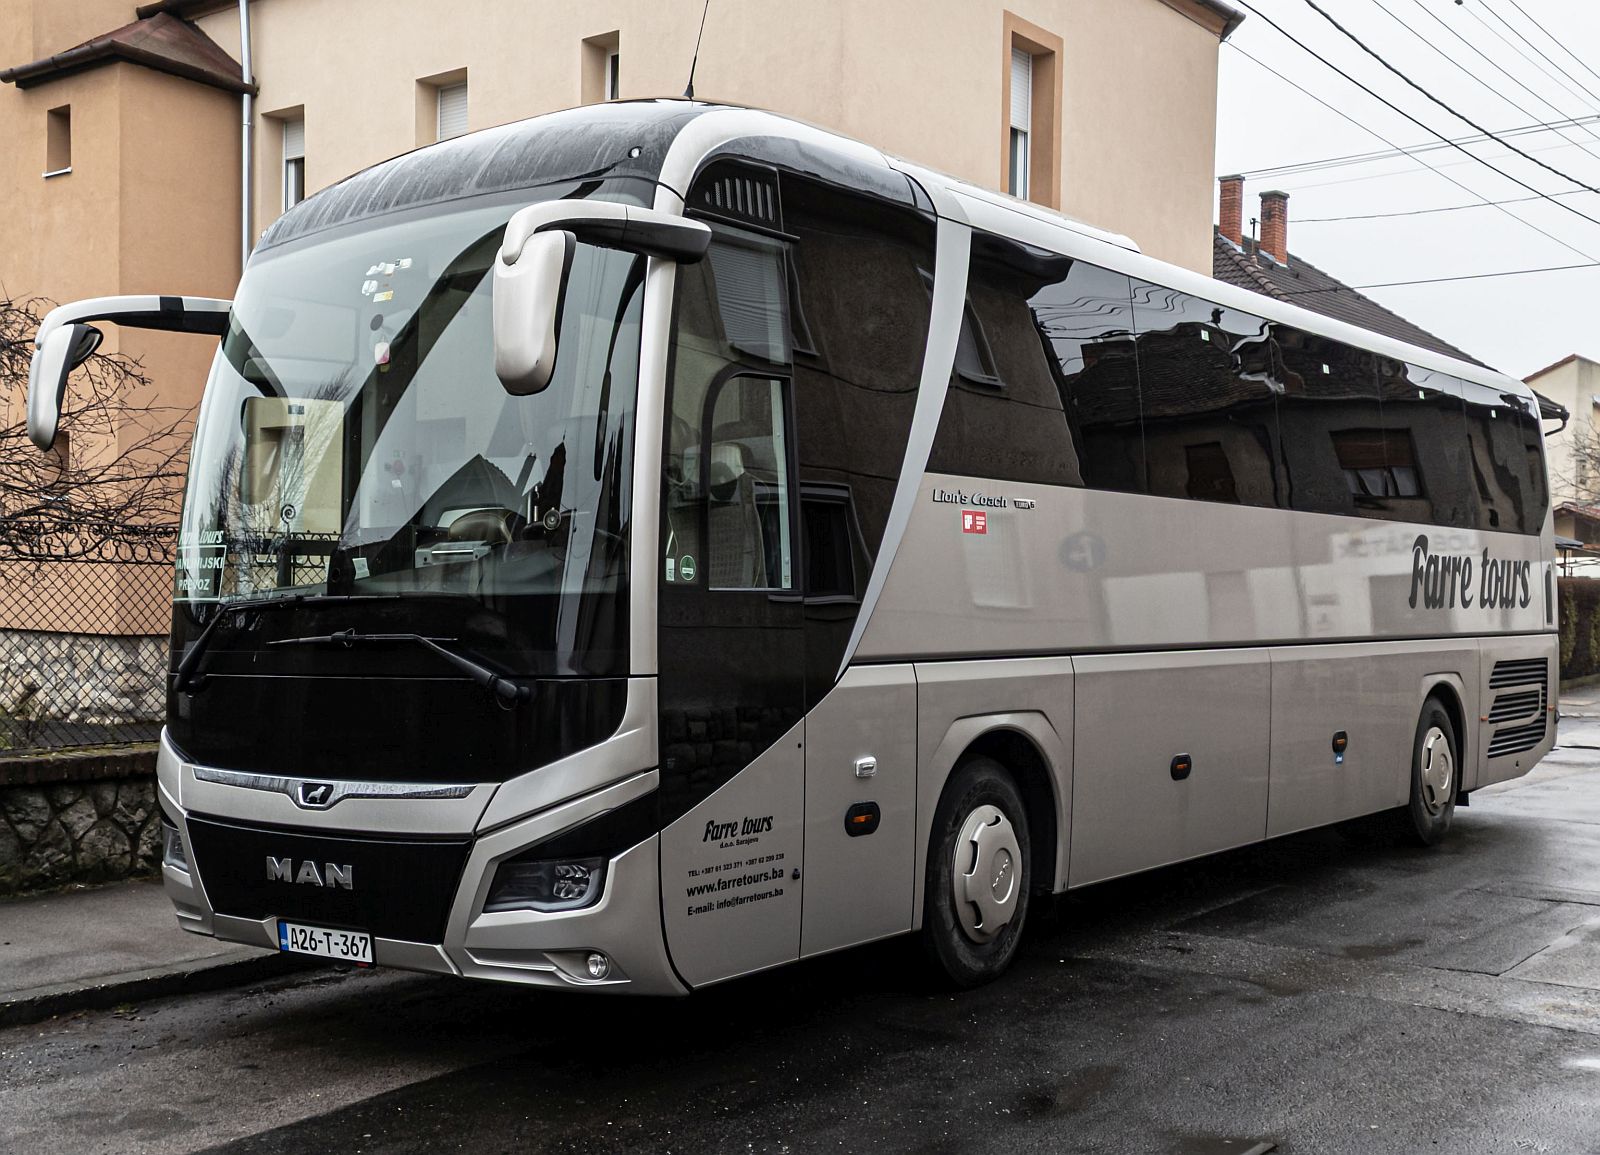 MAN Lion's Coach (dritte generation) von Farre Tours kam von Bosnia-Herzegovina nach Pécs, Ungarn ende Dezember 2021.